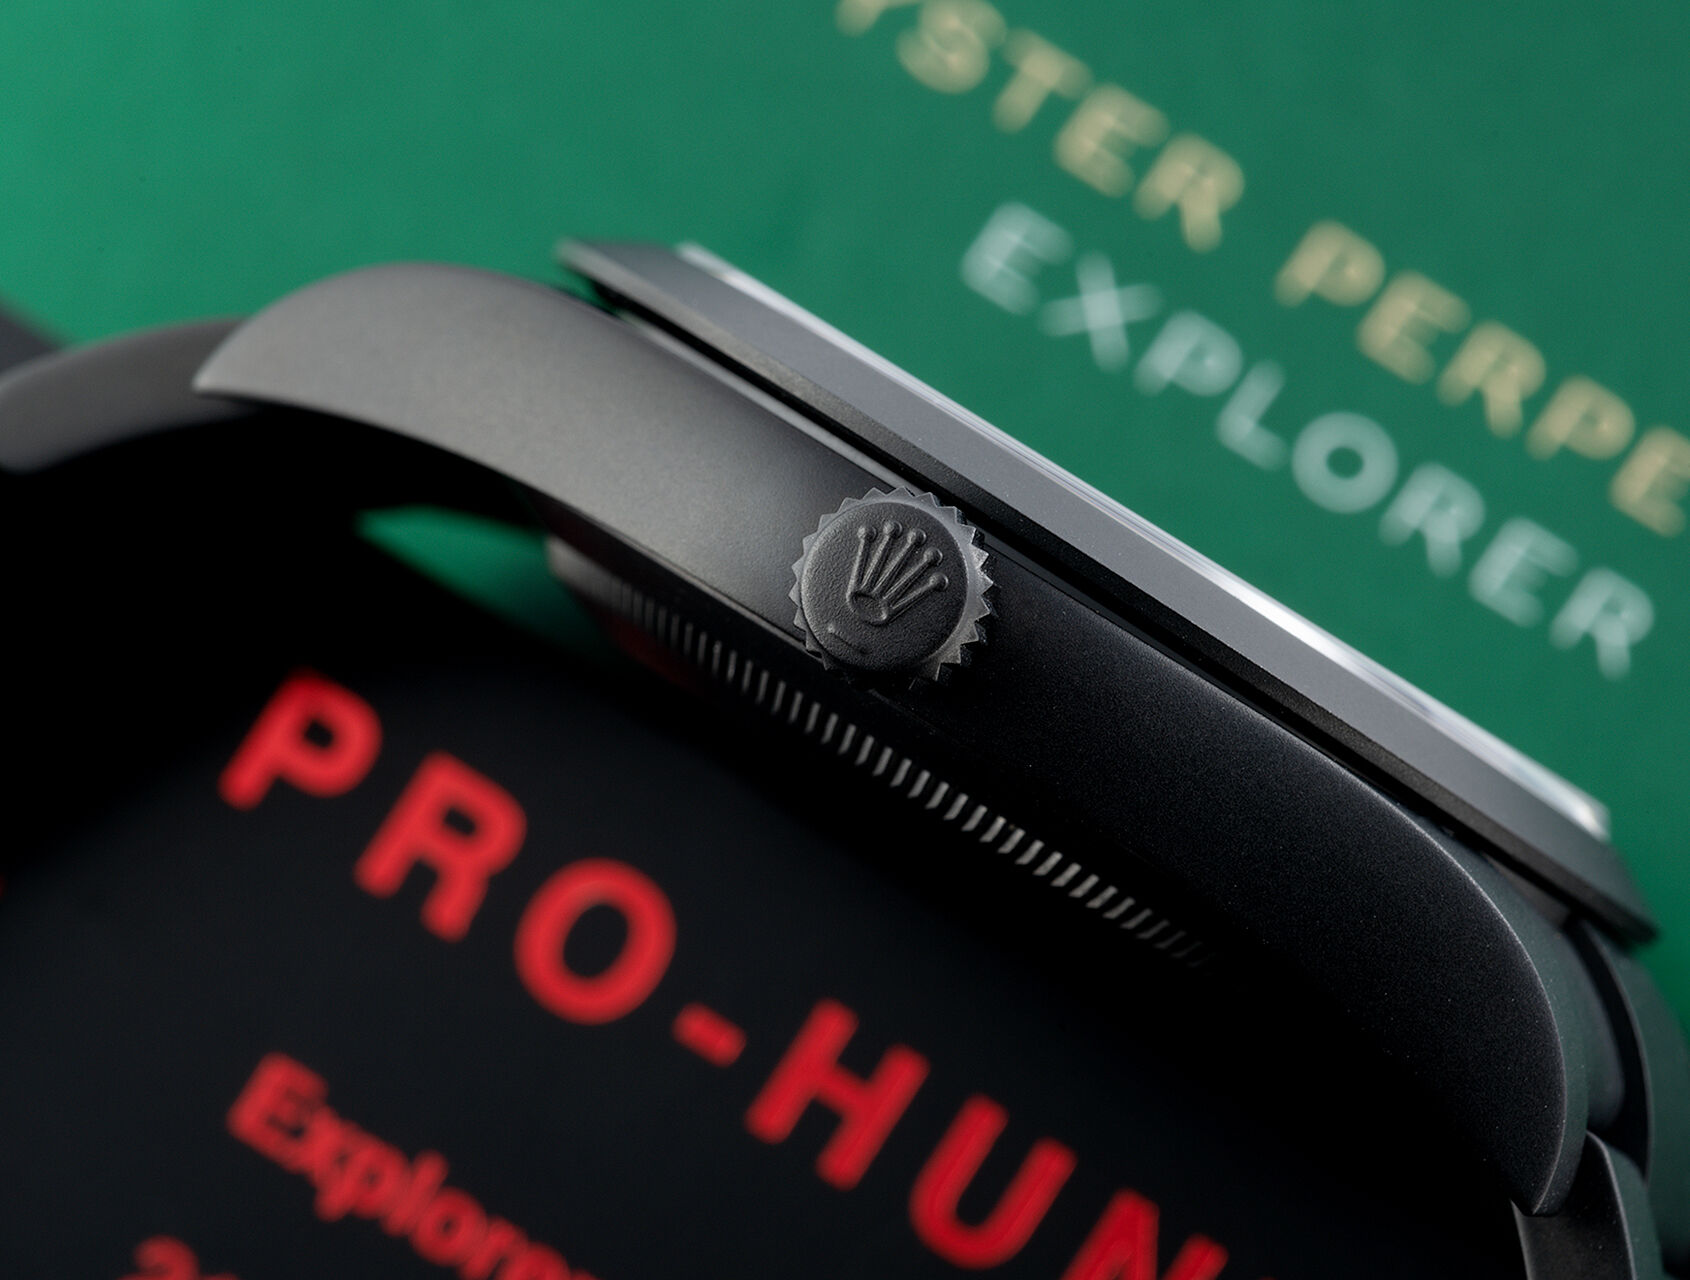 ref 214270 | Limited Edition - 5 Year Warranty | Pro Hunter Explorer